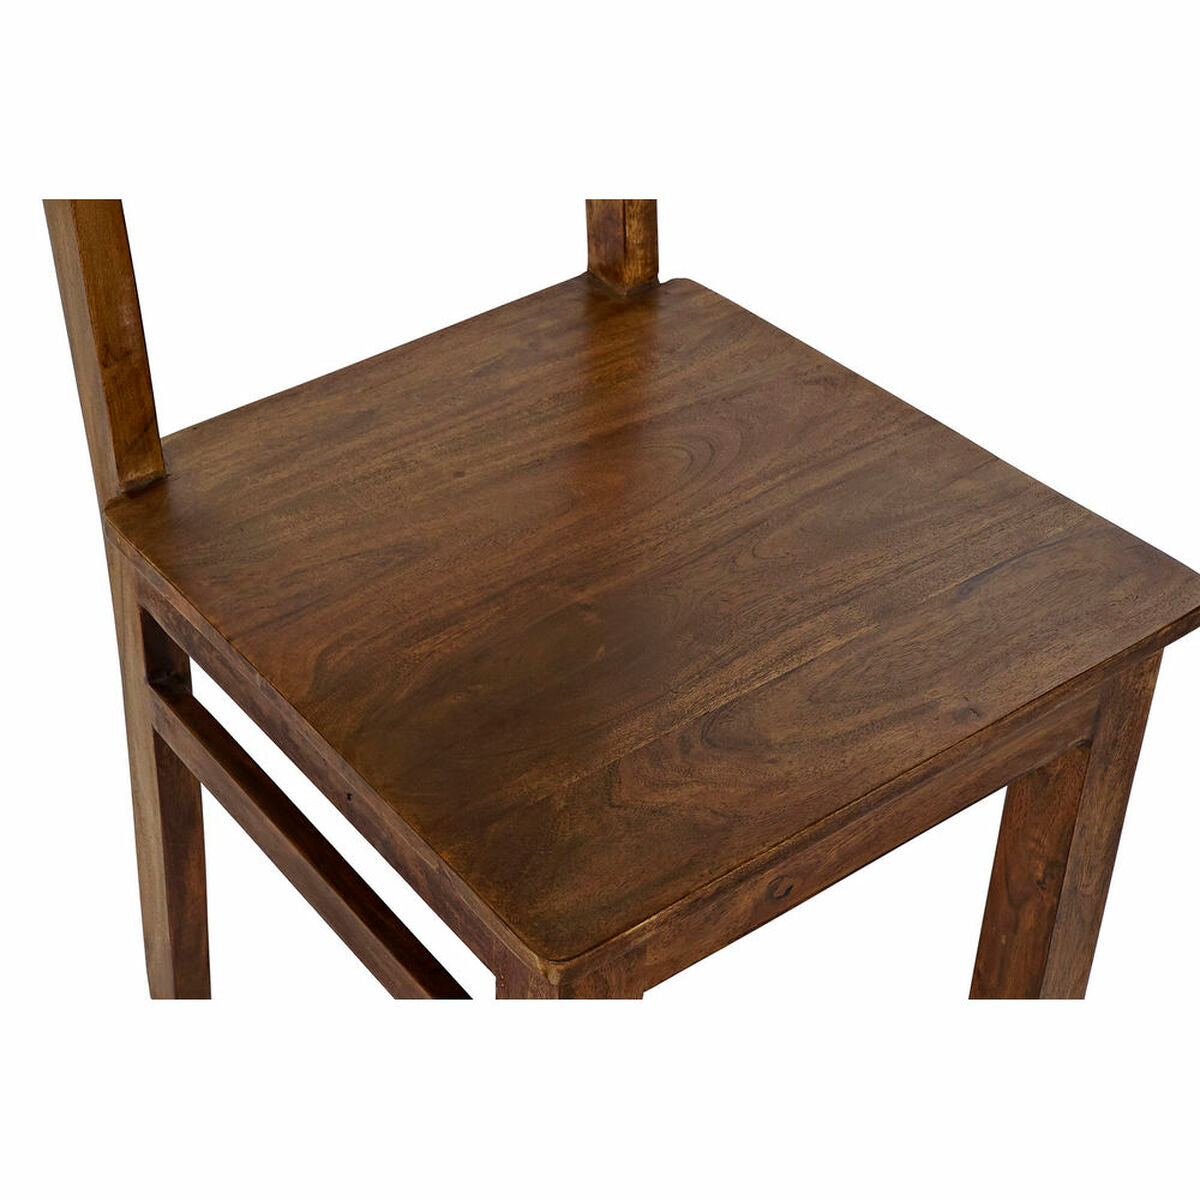 Dining Chair DKD Home Decor Acacia (45 x 46 x 98 cm)